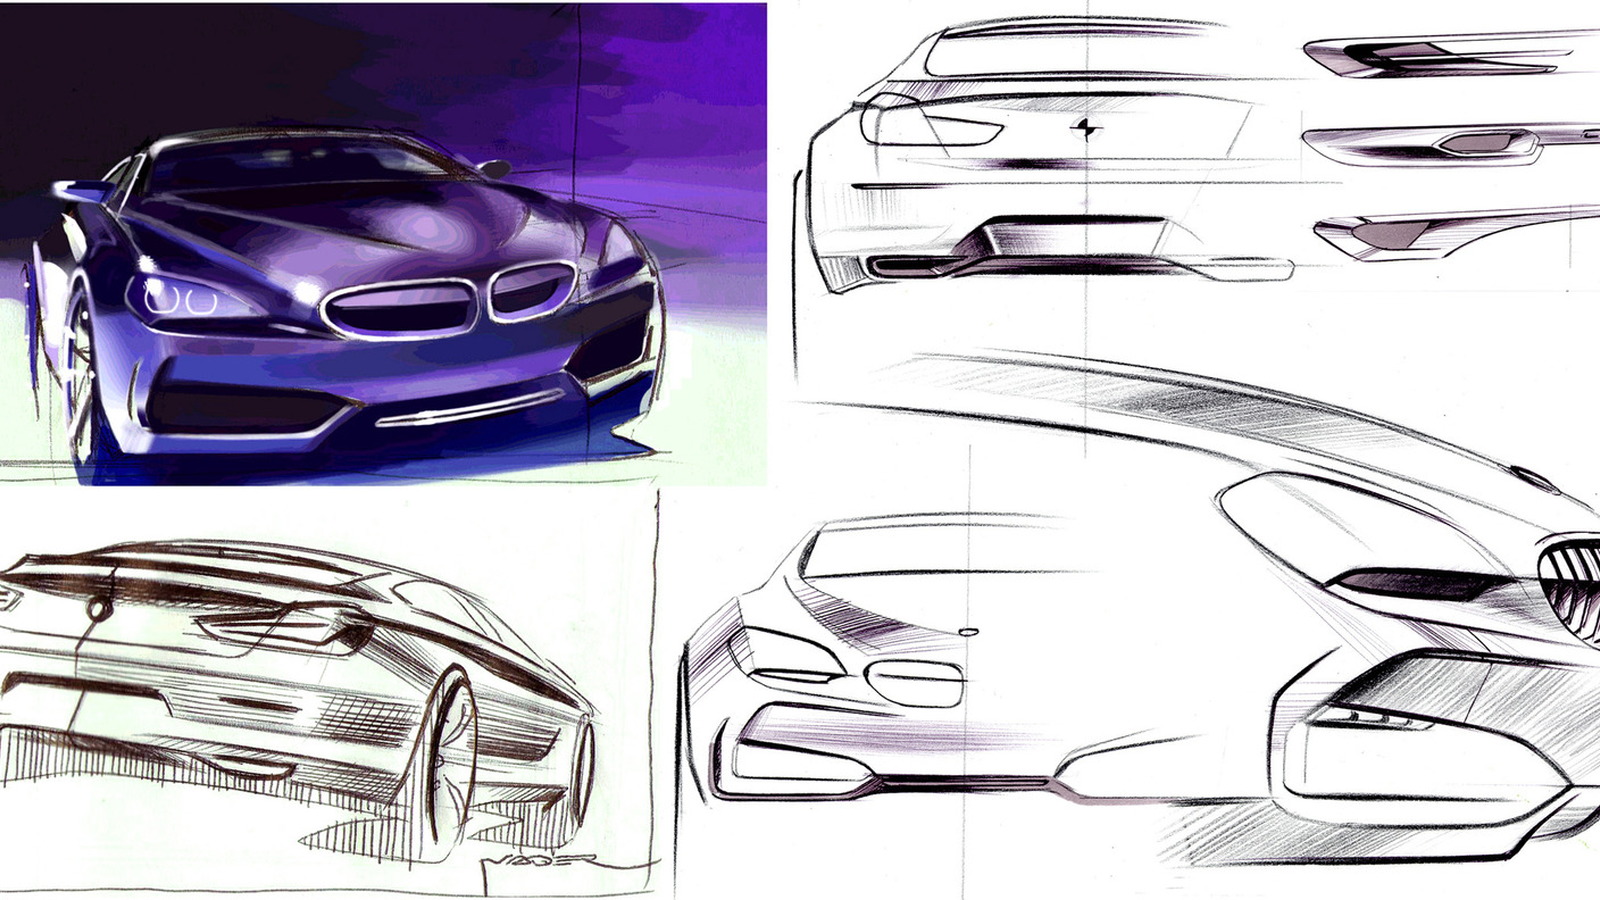 BMW Concept Gran Coupe design process